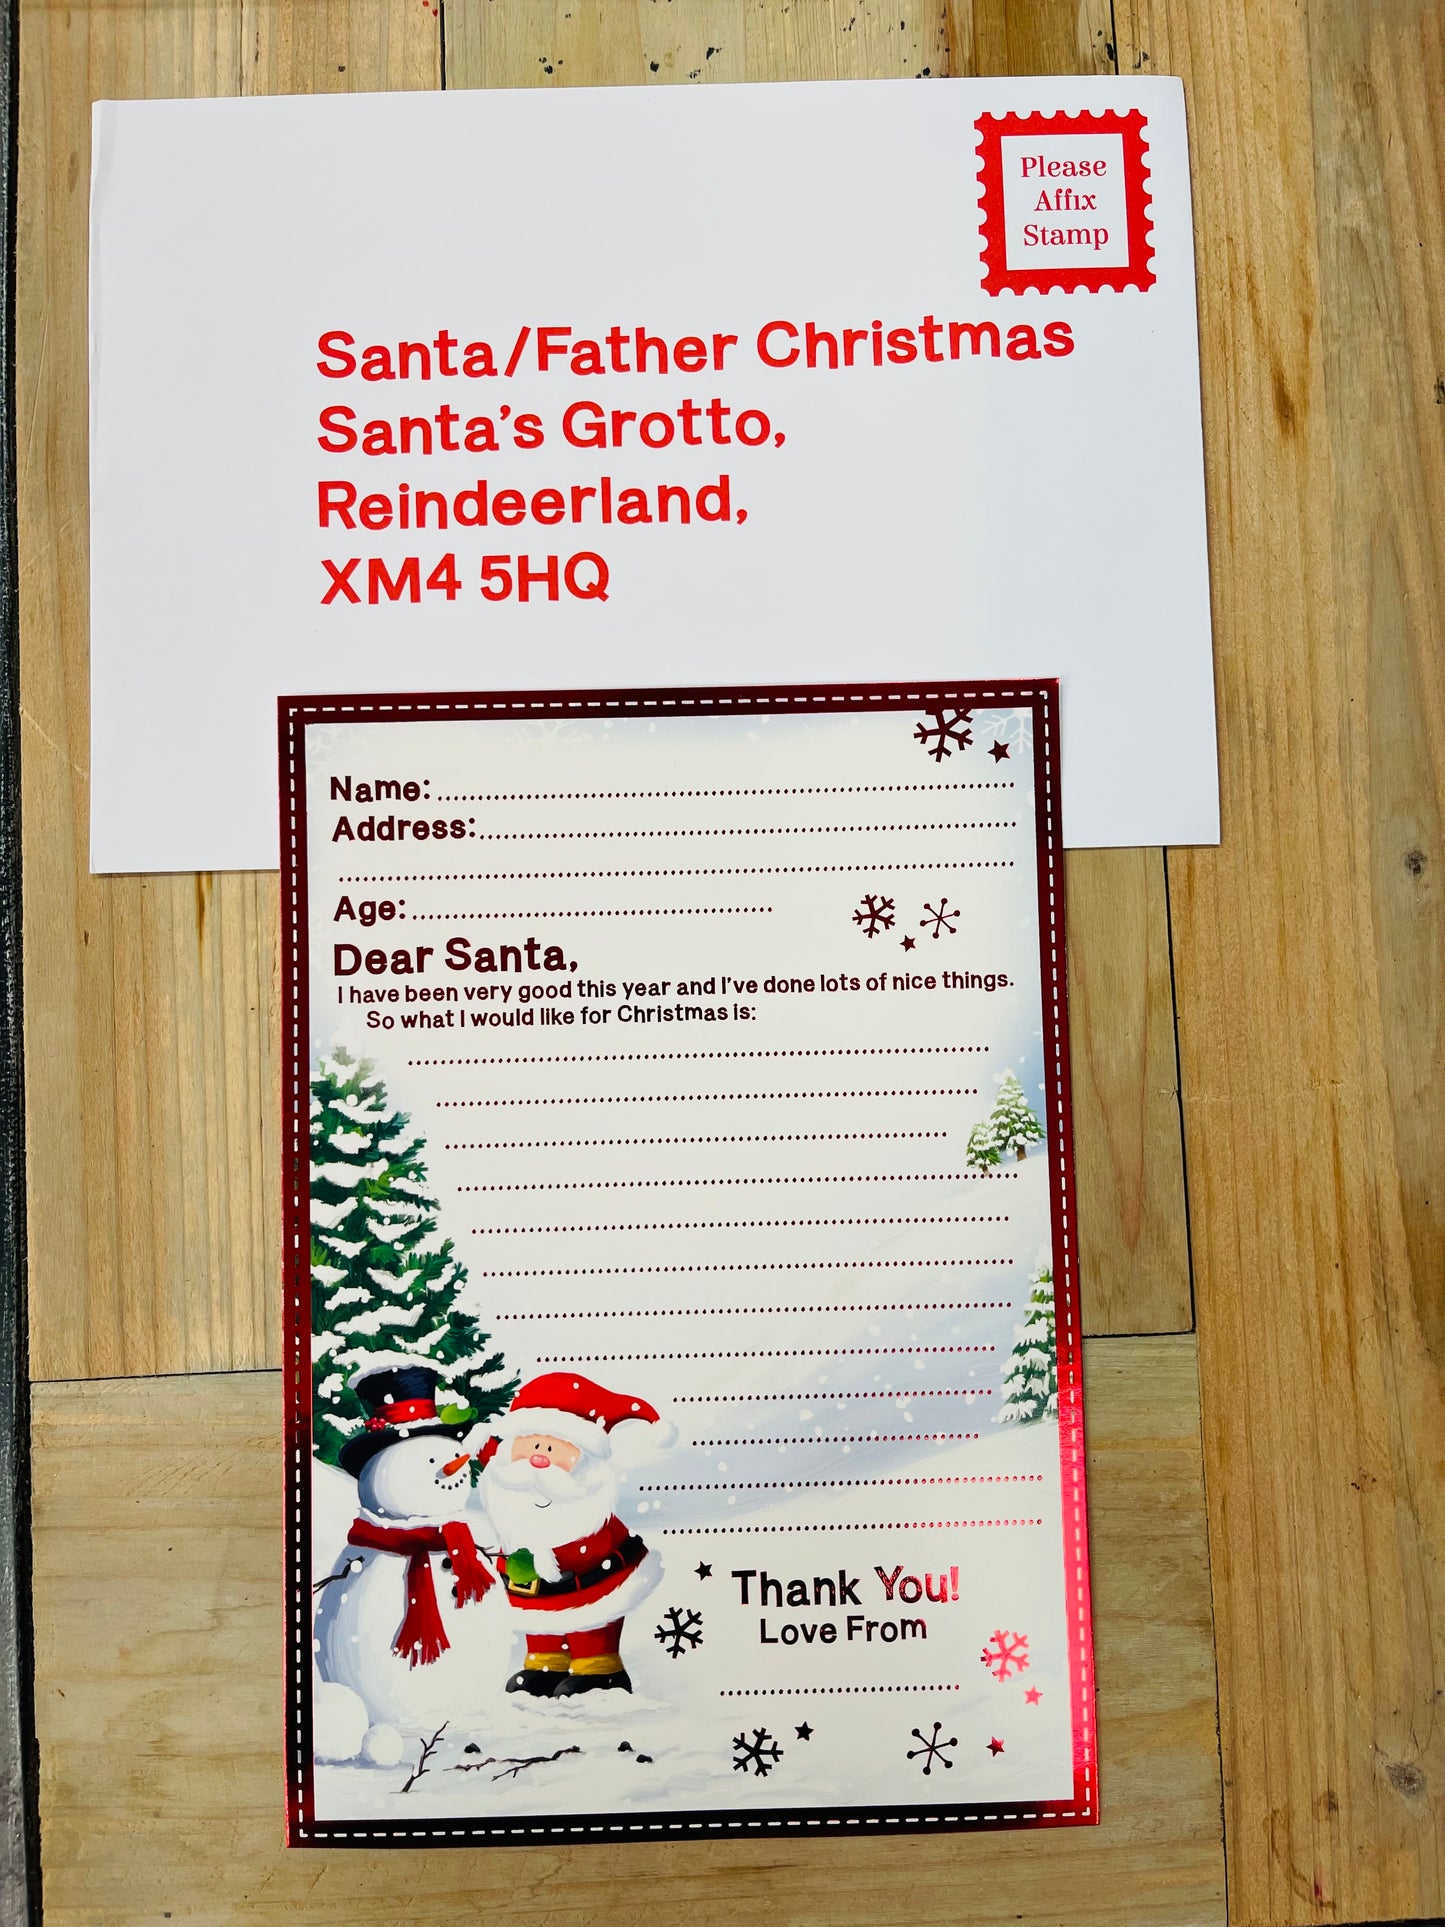 Letter to Santa.